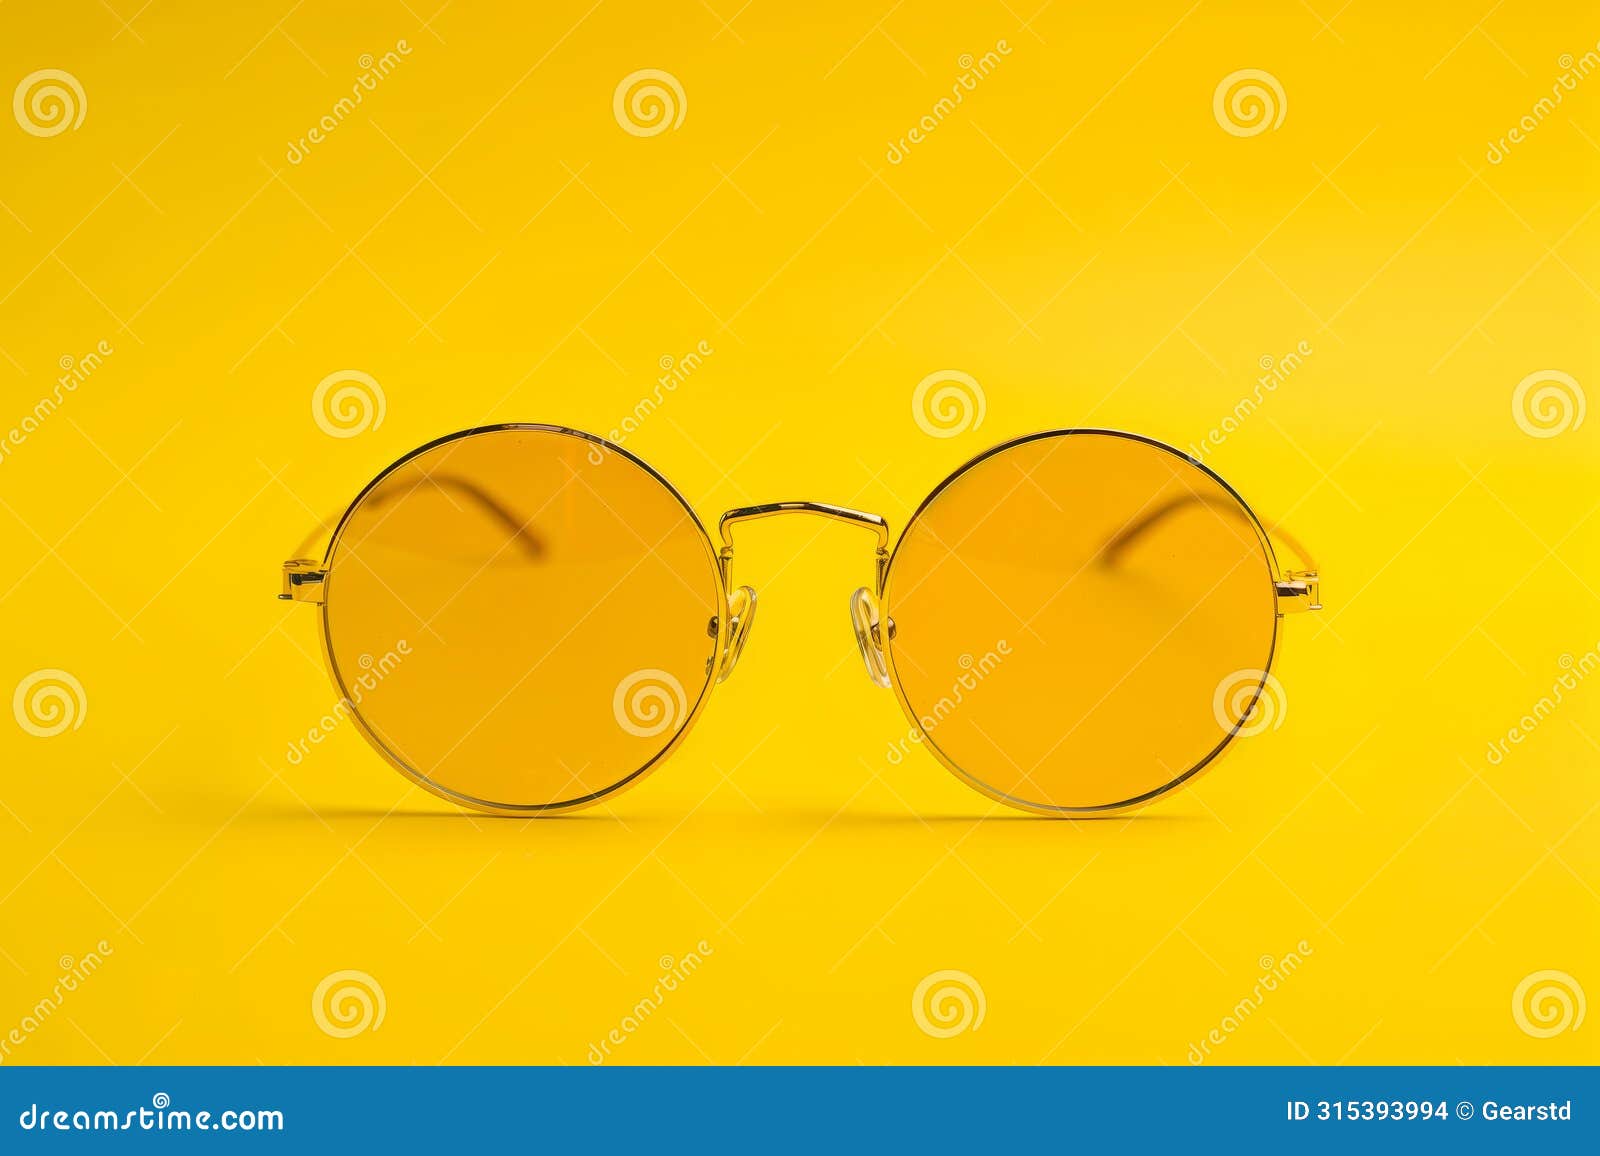 round yellow tinted sunglasses on yellow